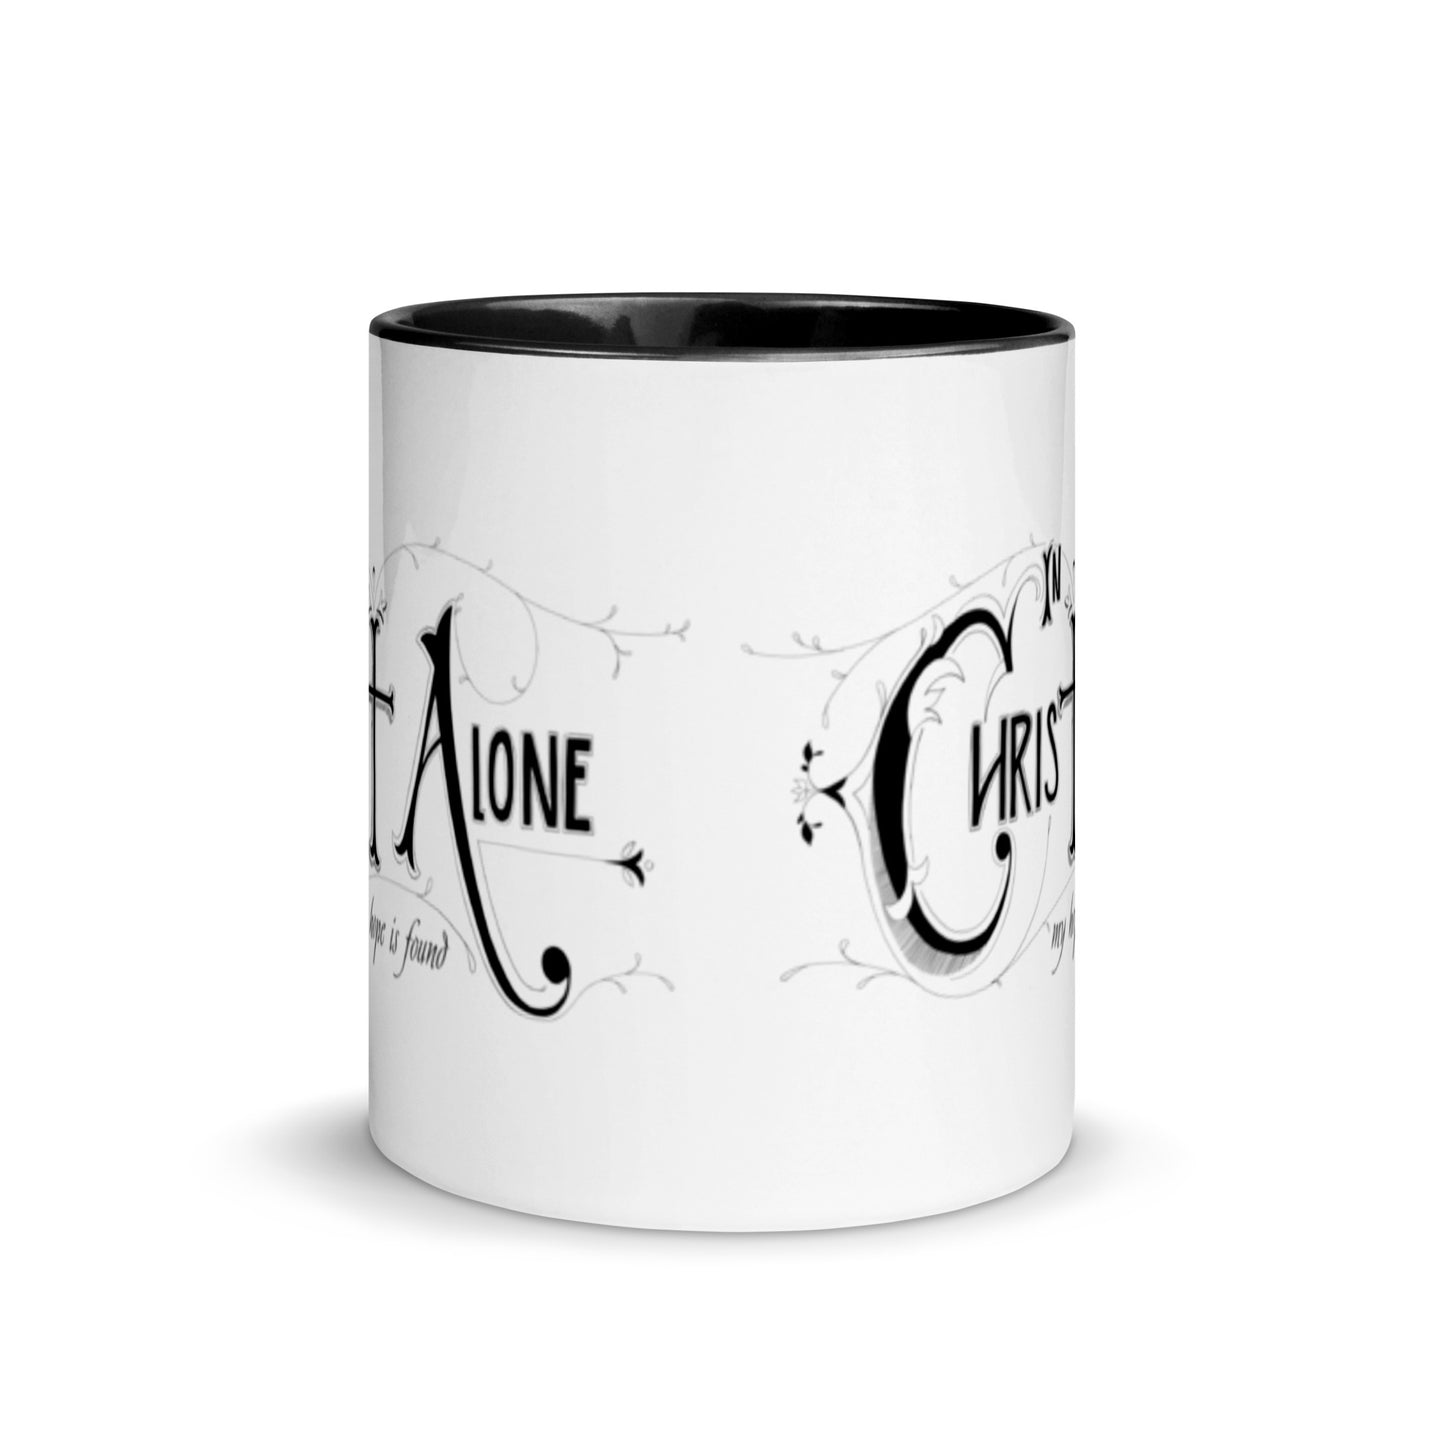 In Christ Alone Mug